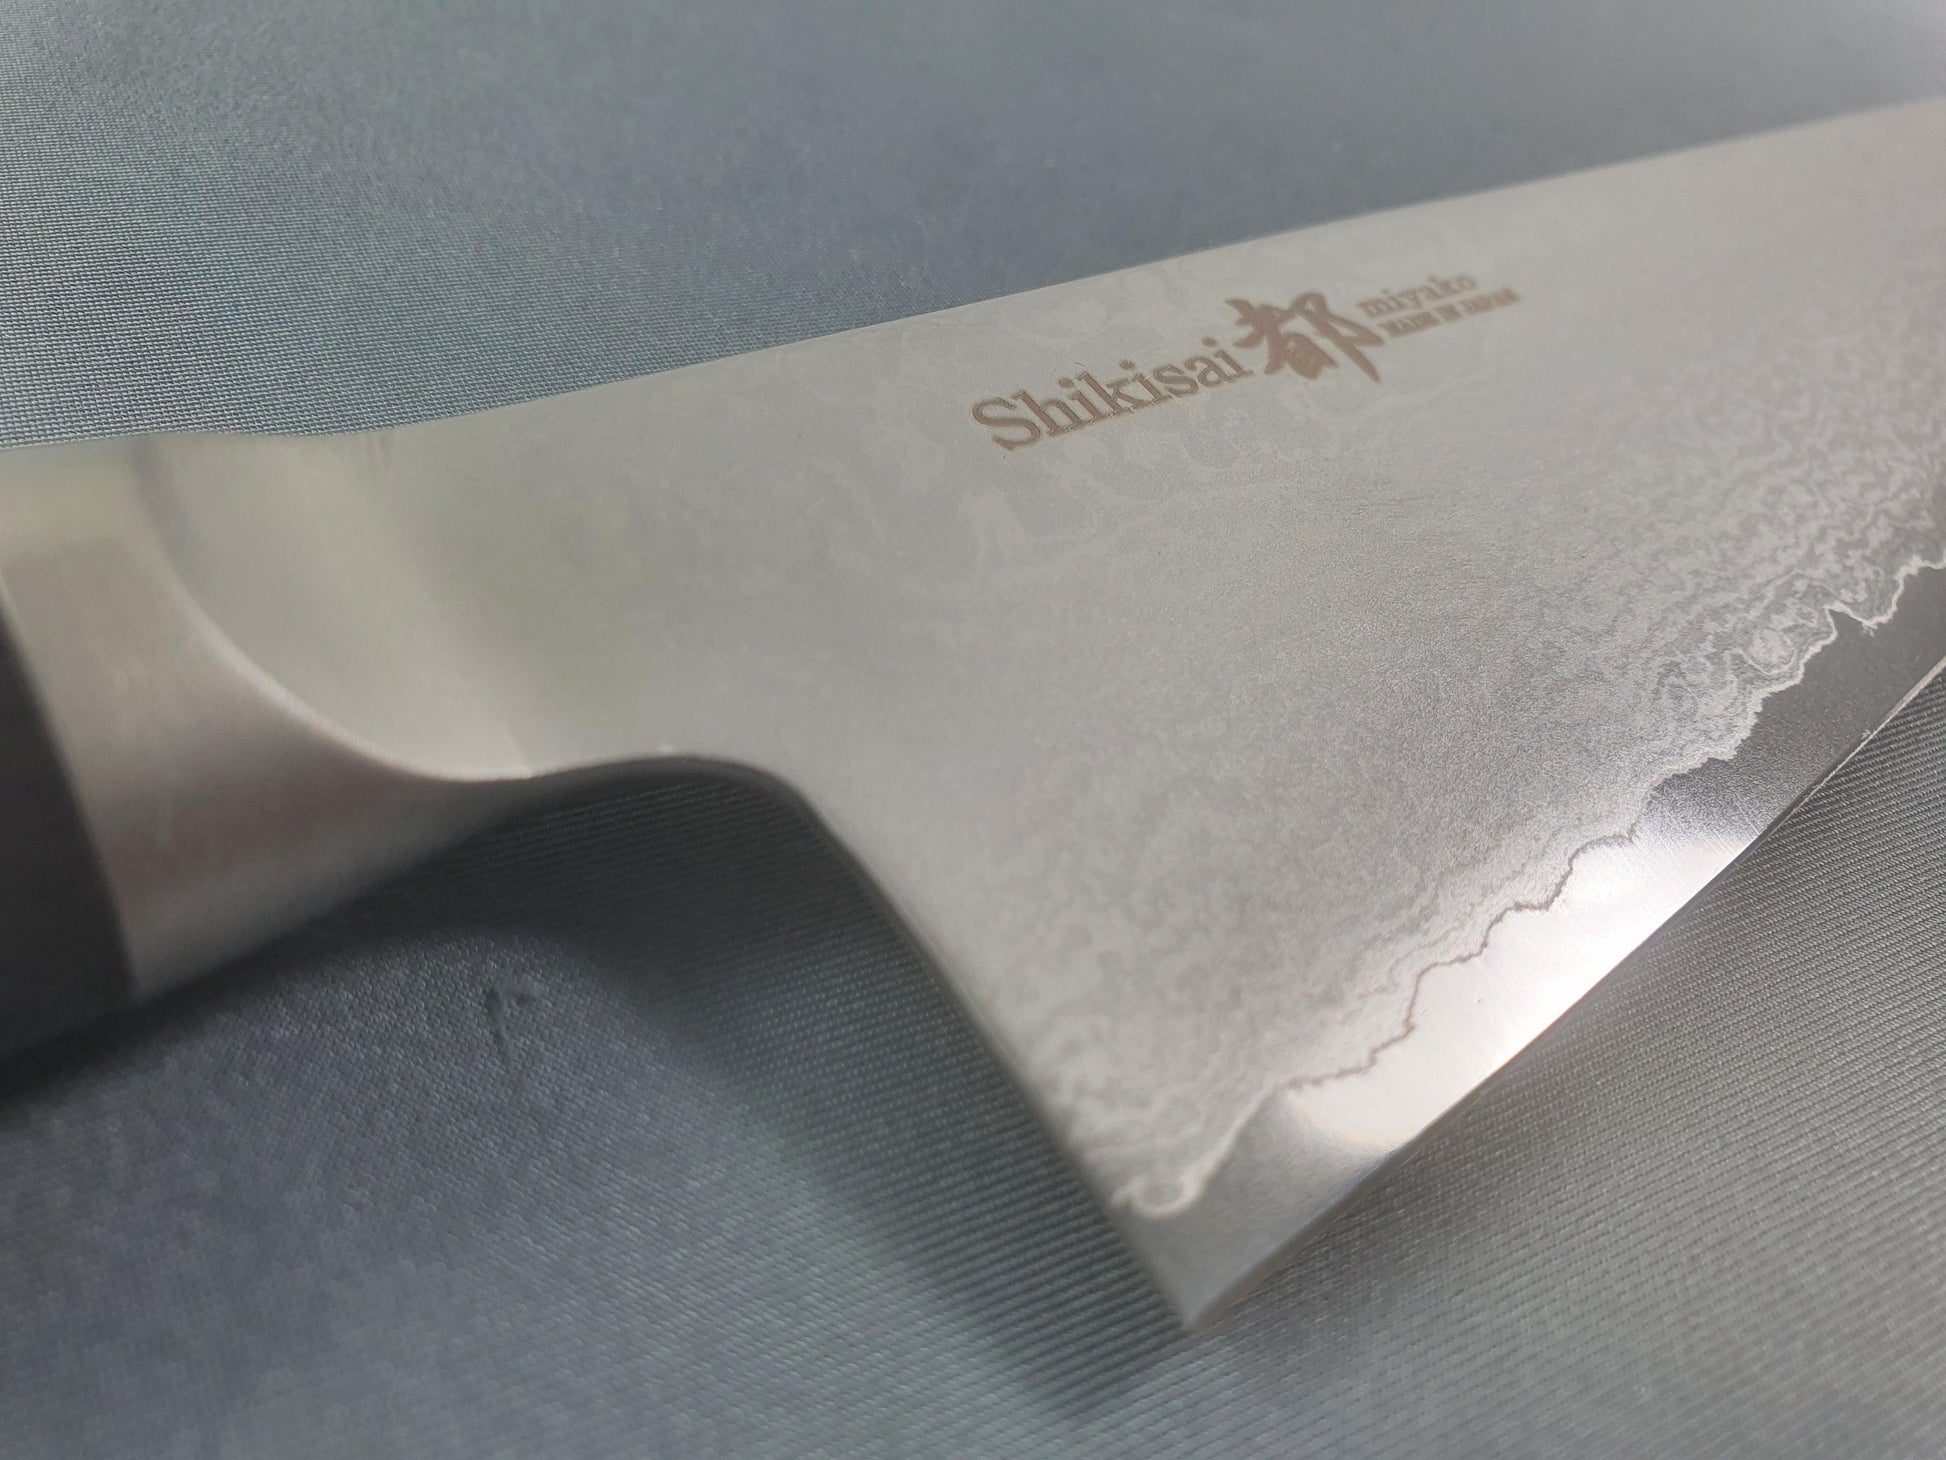 Shikisai MIYAKO Damascus 240mm Gyuto - The Sharp Chef